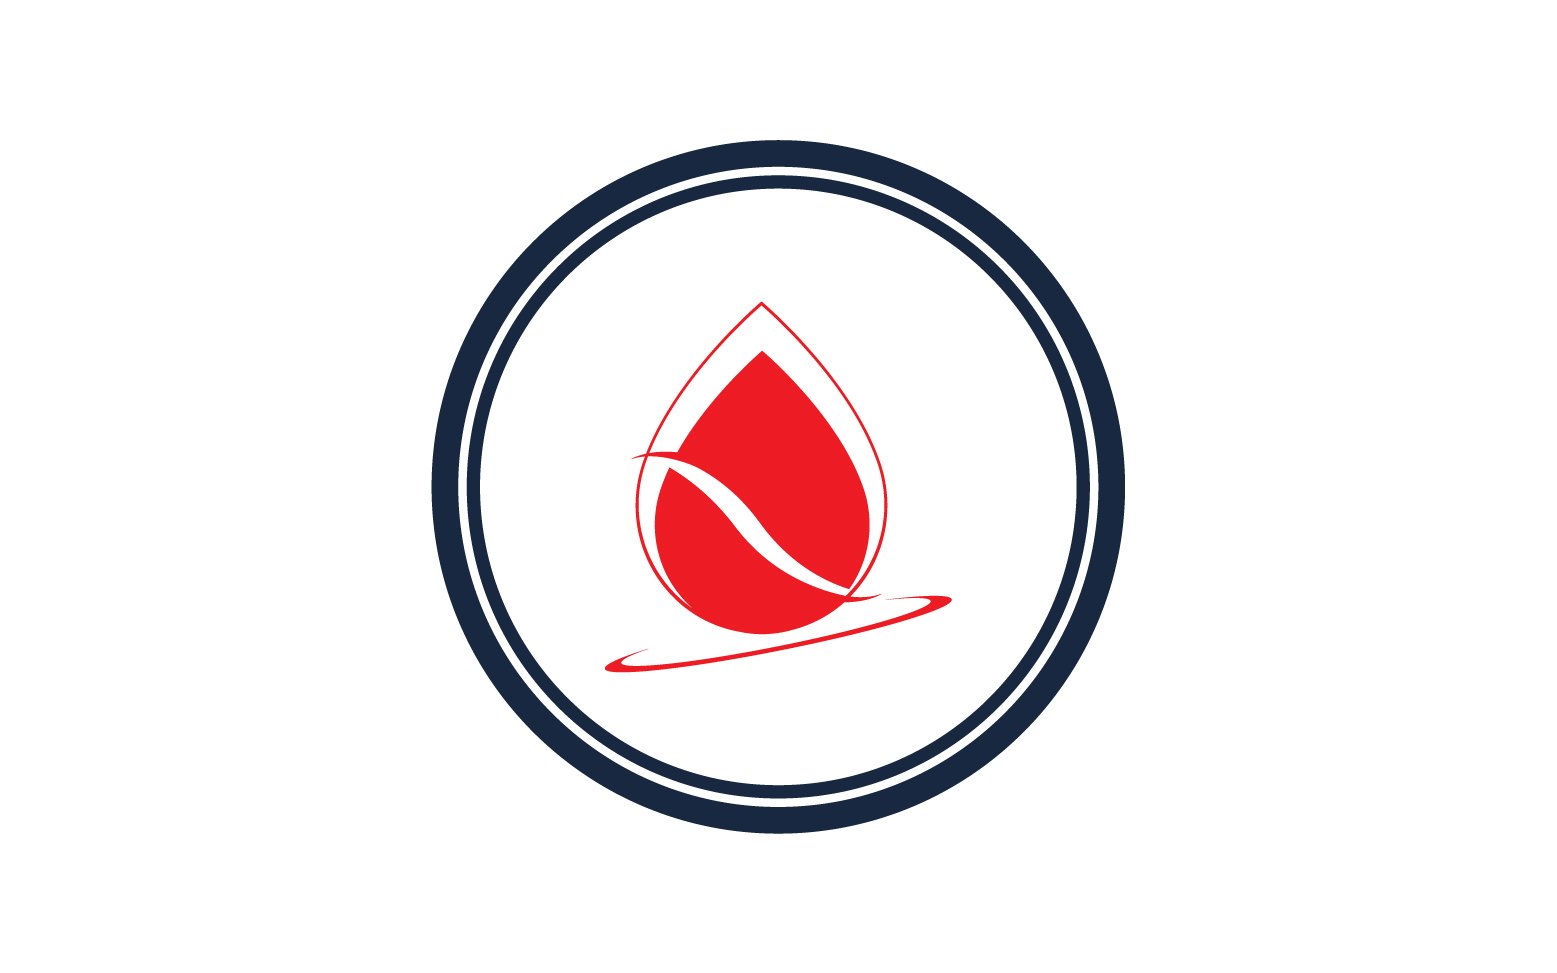 Blood drop icon logo template version v34